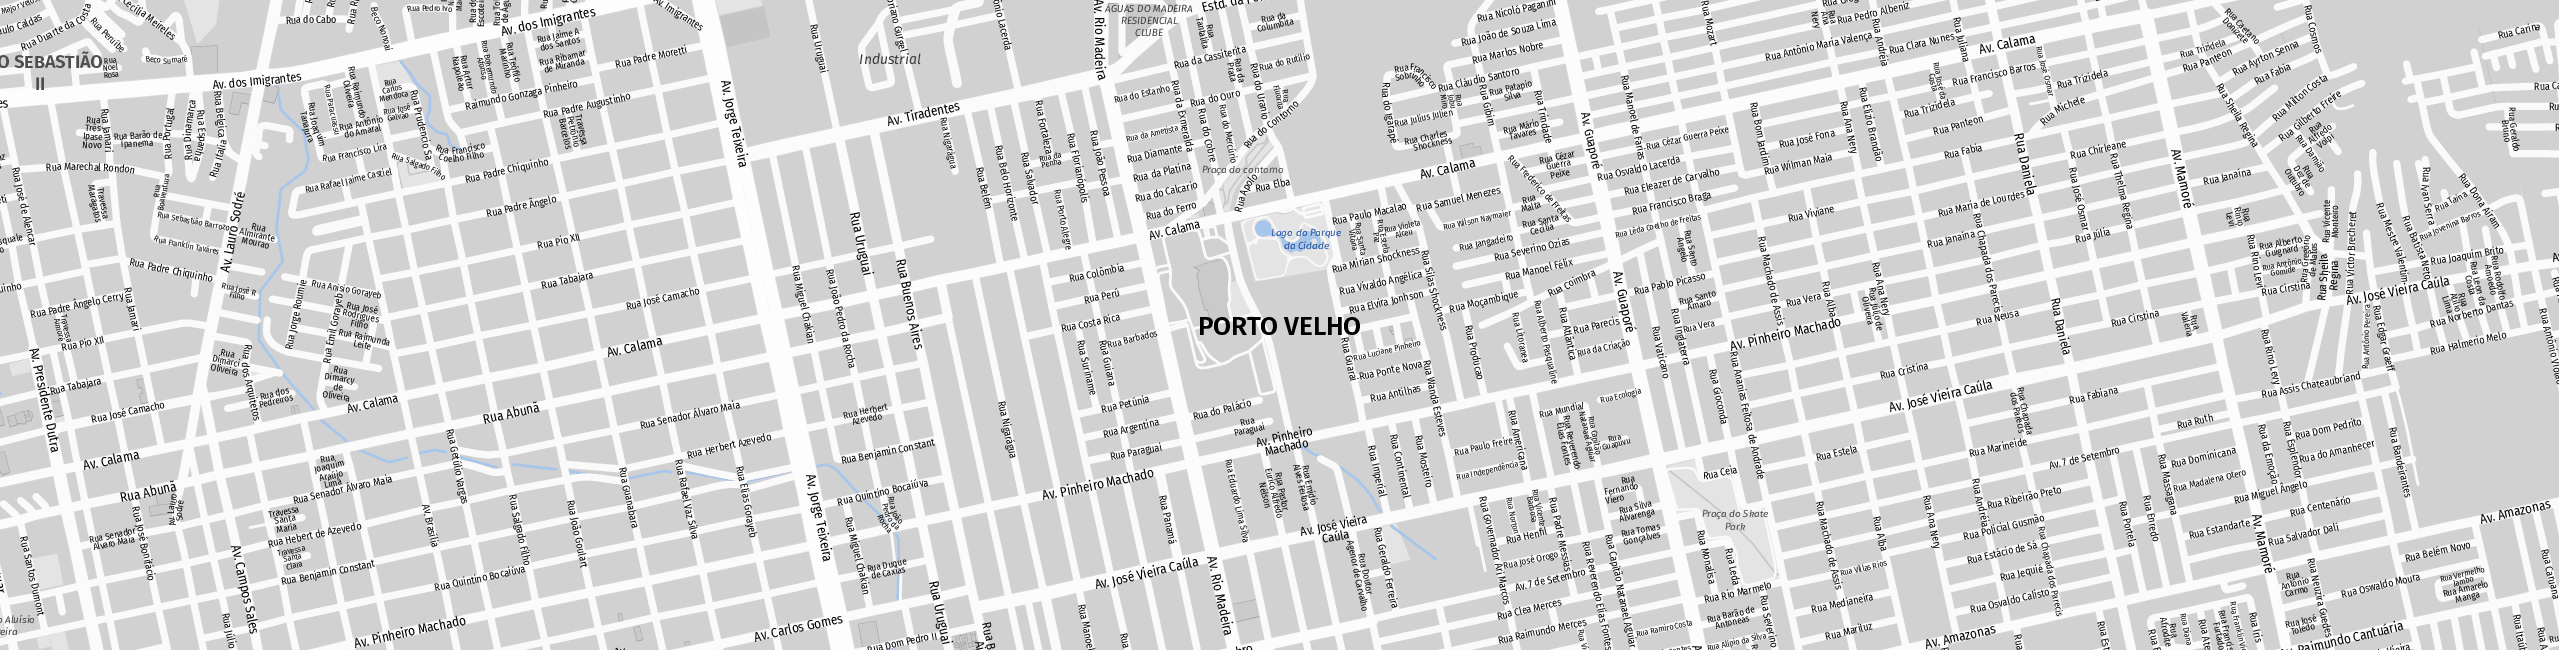 Stadtplan Porto Velho zum Downloaden.